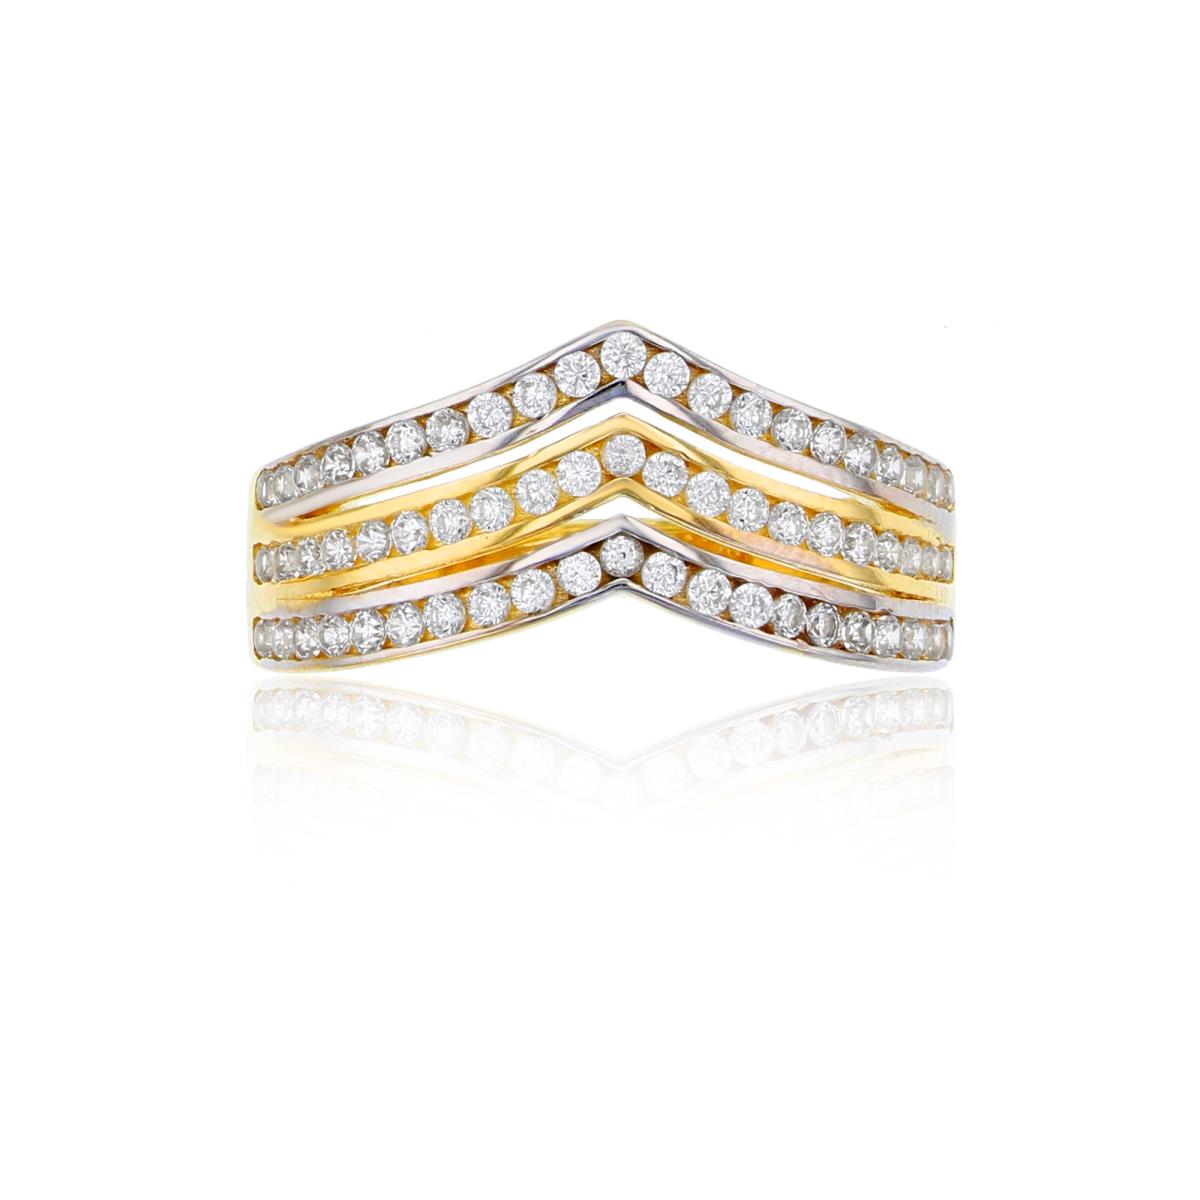 14K Two-Tone Gold 3-Row "V" Shaped Fashion Ring